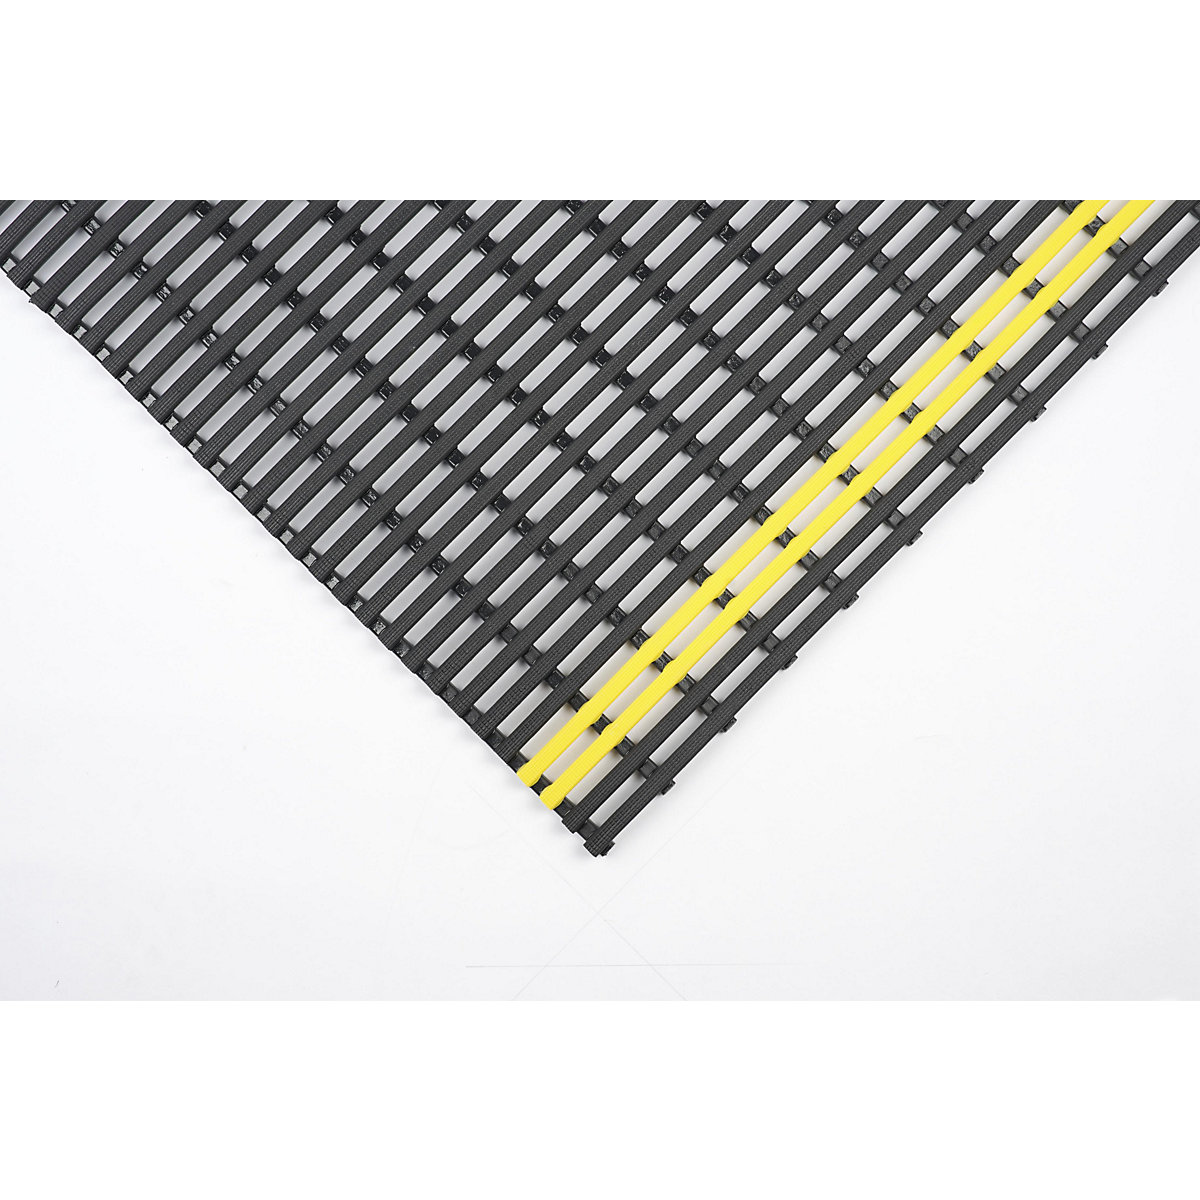 Esteira antiderrapante, PVC reciclado, por metro corrente, largura 800 mm, preto/amarelo